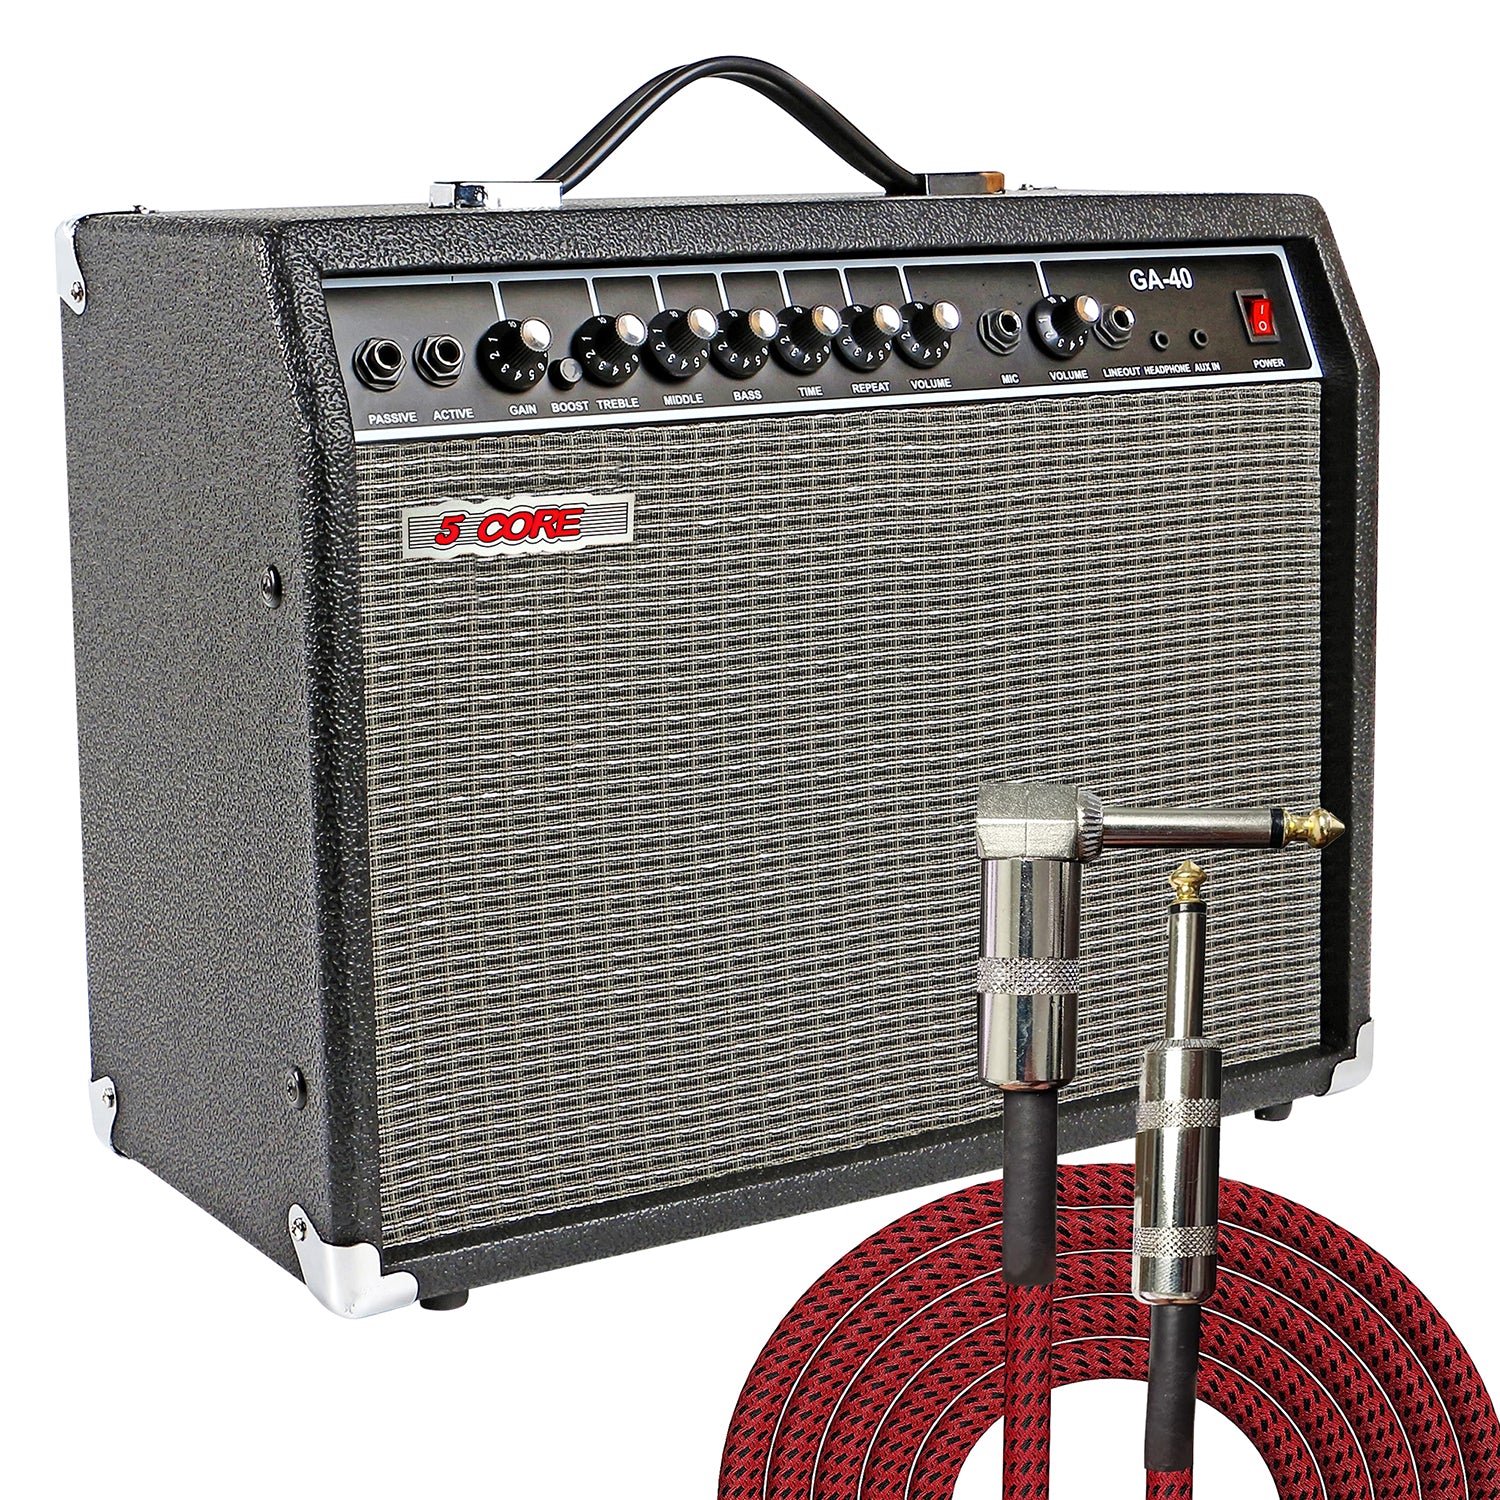 5 Core Guitar Amplifier Mini Bass Electric Guitar Amp 40W Portable Guitar Amp w Aux Input Volume Bass Treble Control -GA 40 BLK